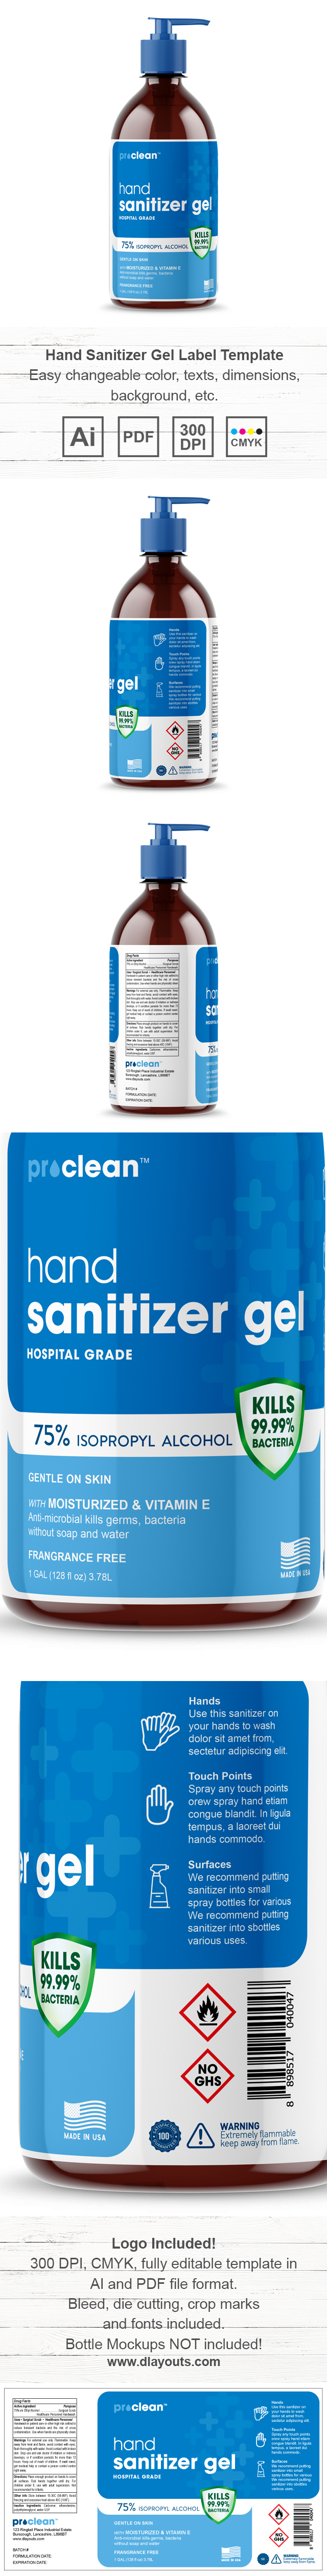 Hand Sanitizer Gel Label Template